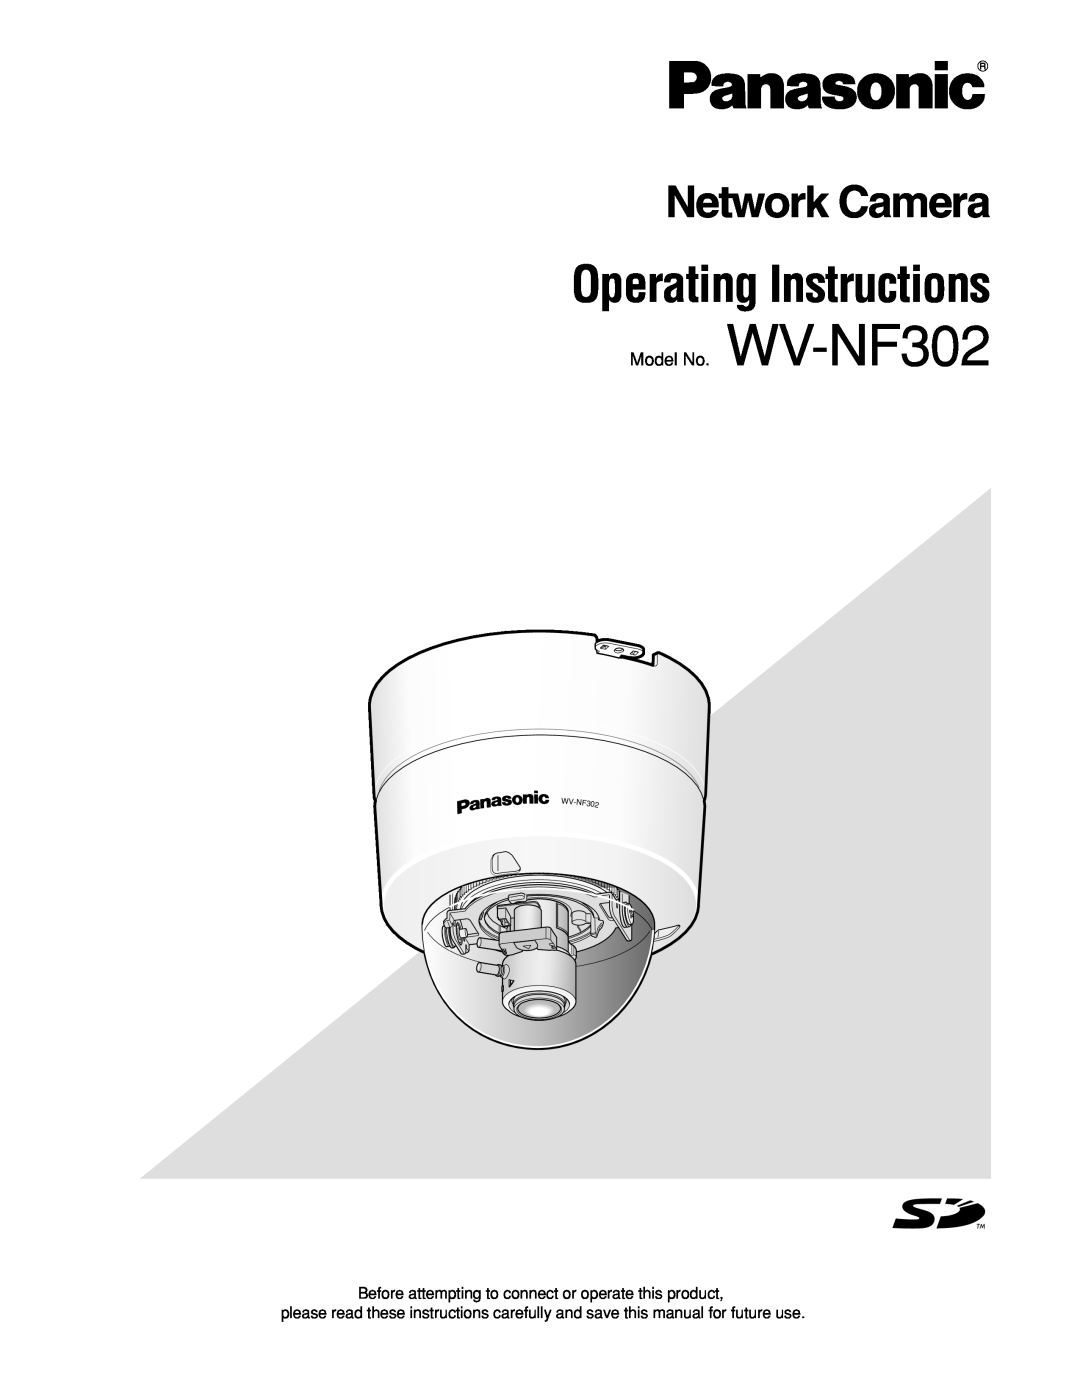 Panasonic WV-NF302 manual Operating Instructions, Network Camera 